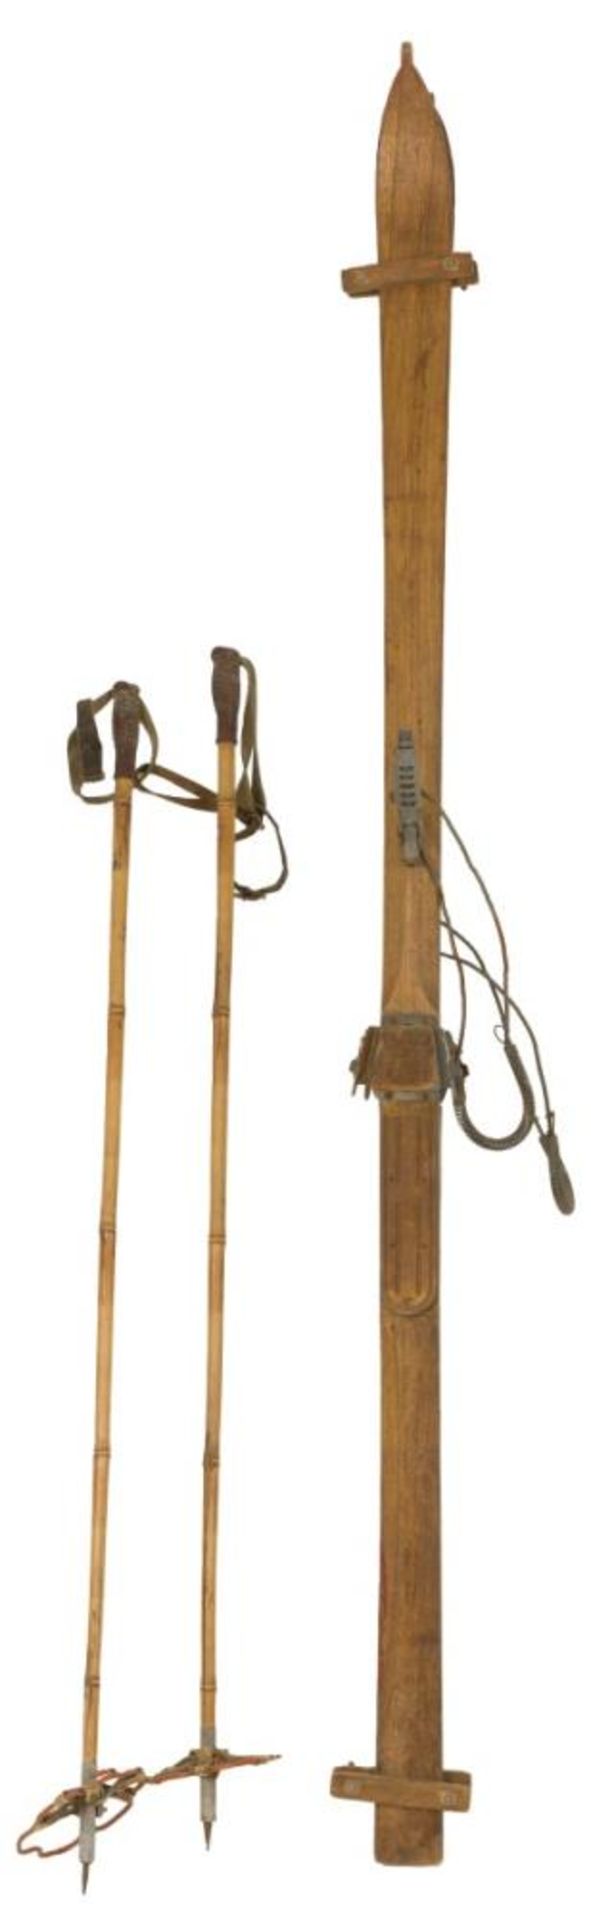 A set of ski's and ski sticks, early 20th century.